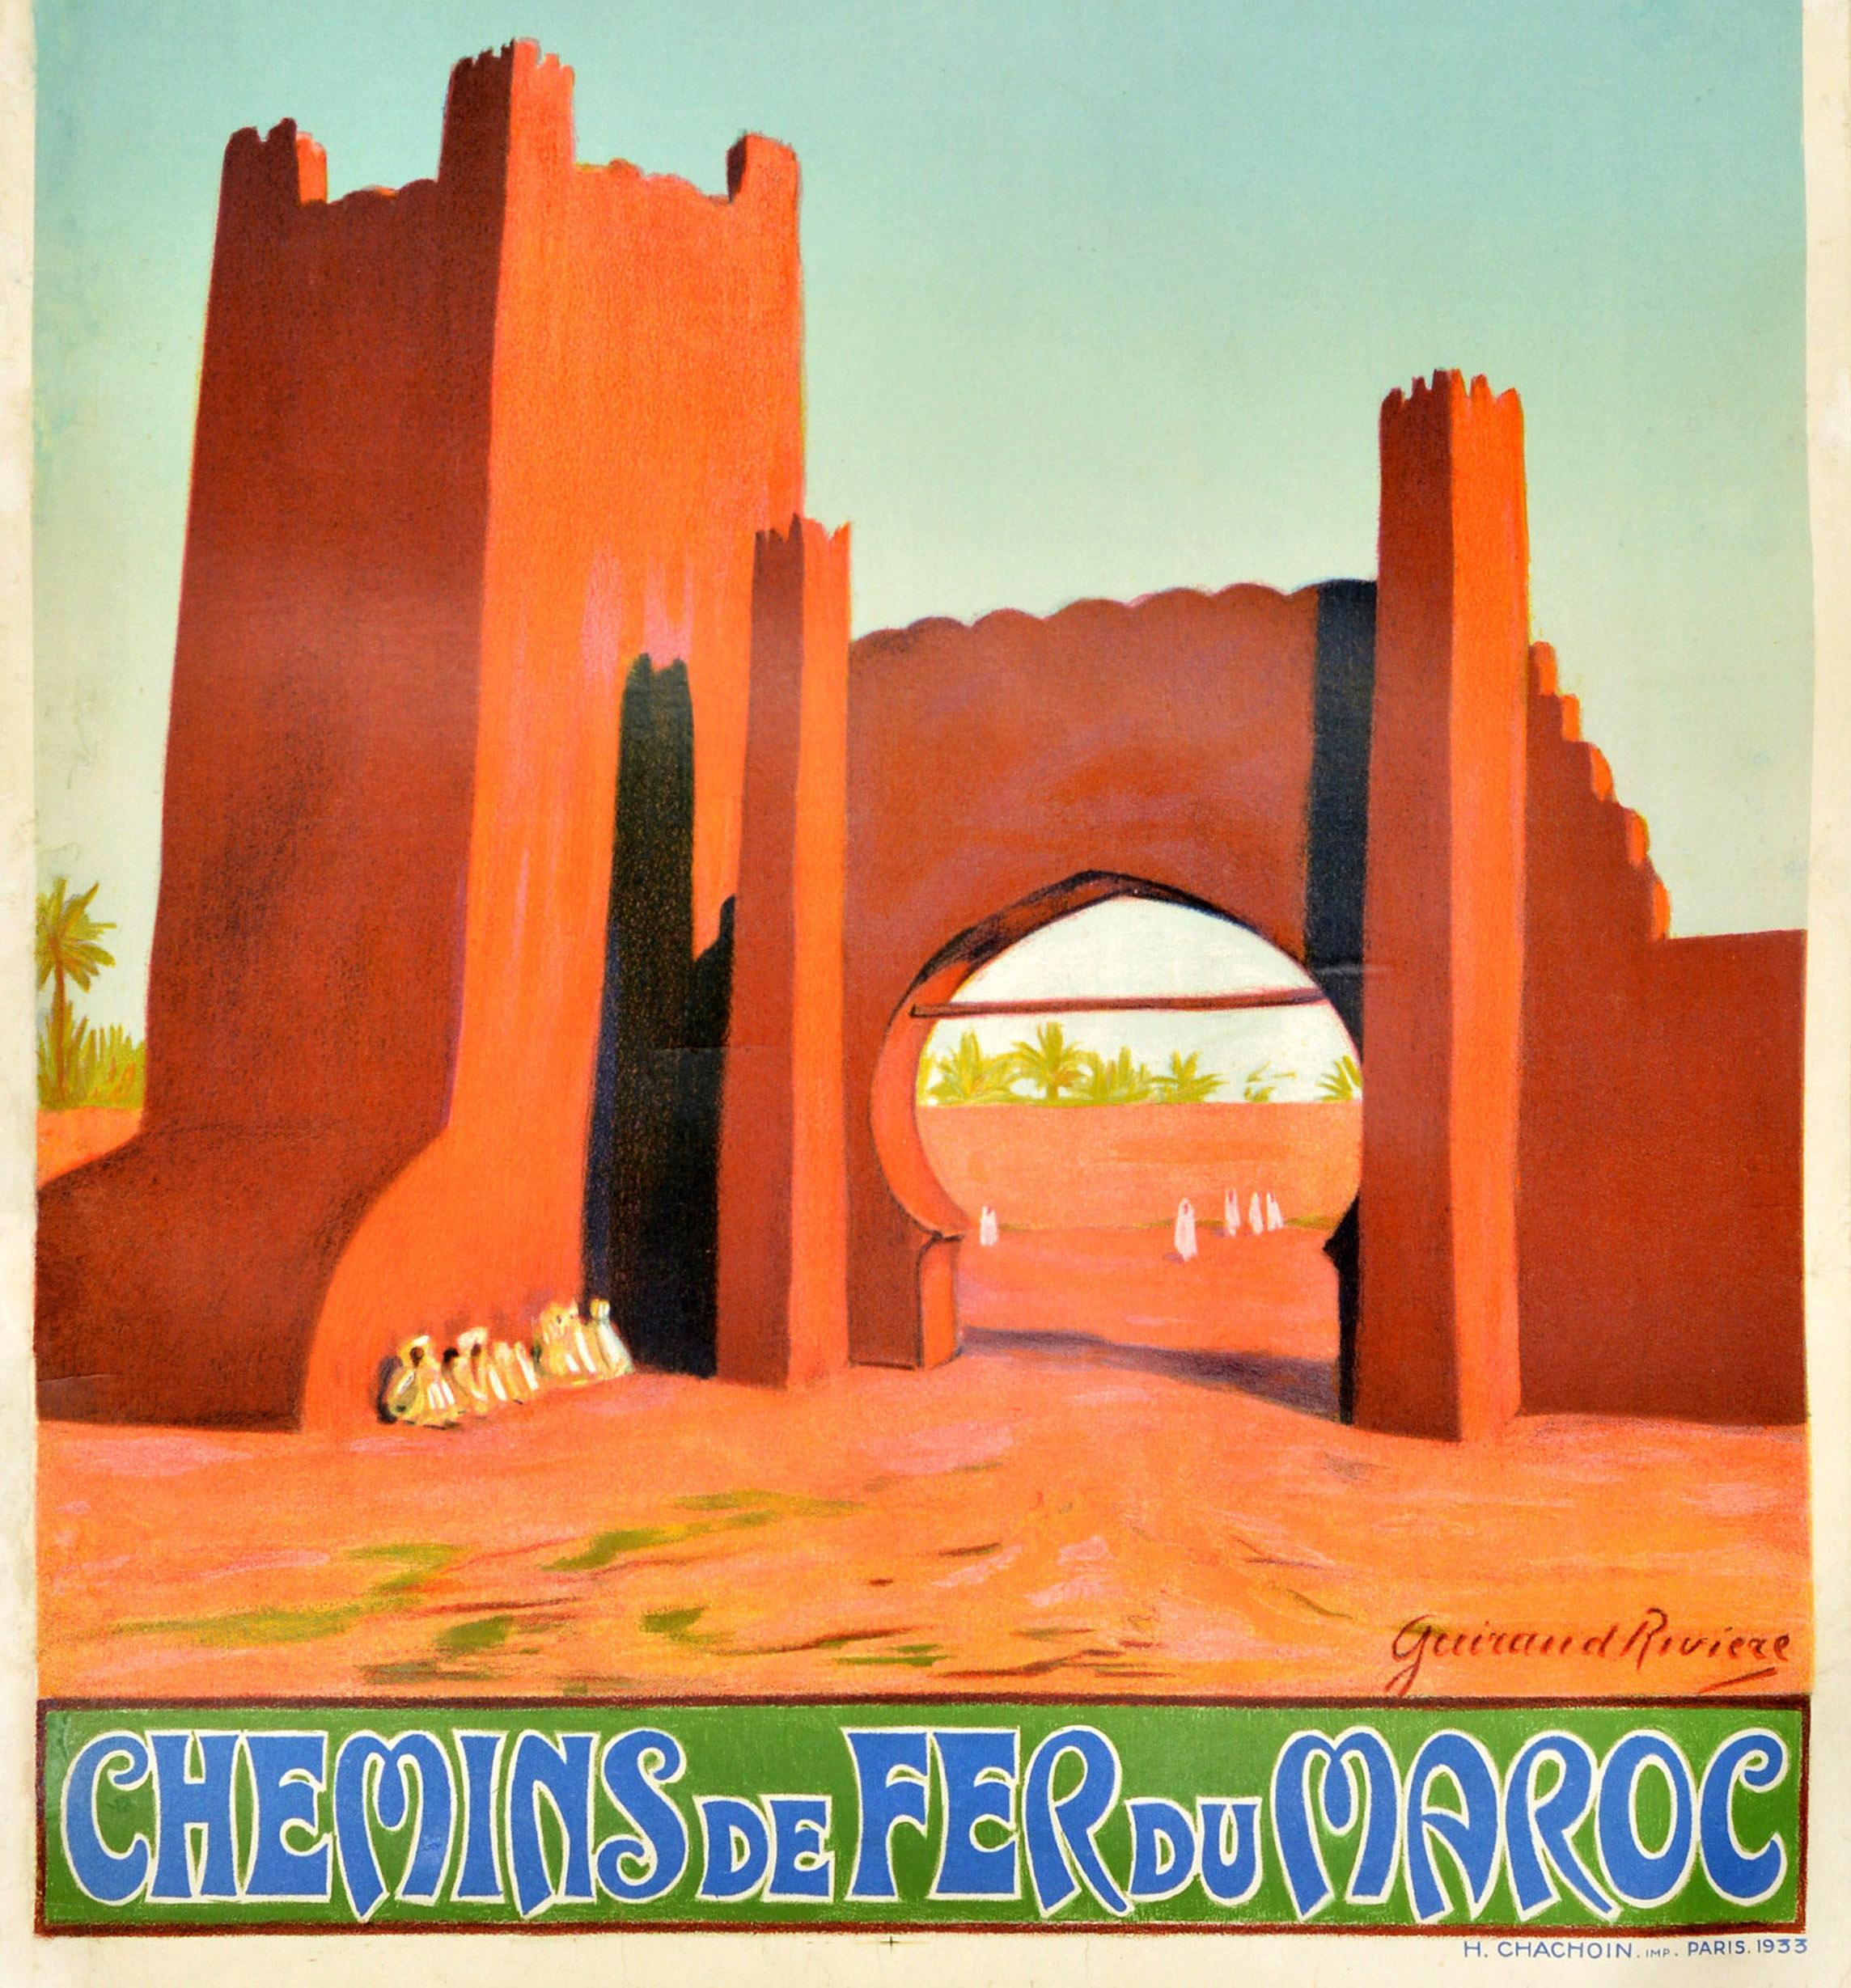 Original Vintage Travel Poster Morocco Chemins De Fer Du Maroc Guiraud Riviere In Good Condition For Sale In London, GB